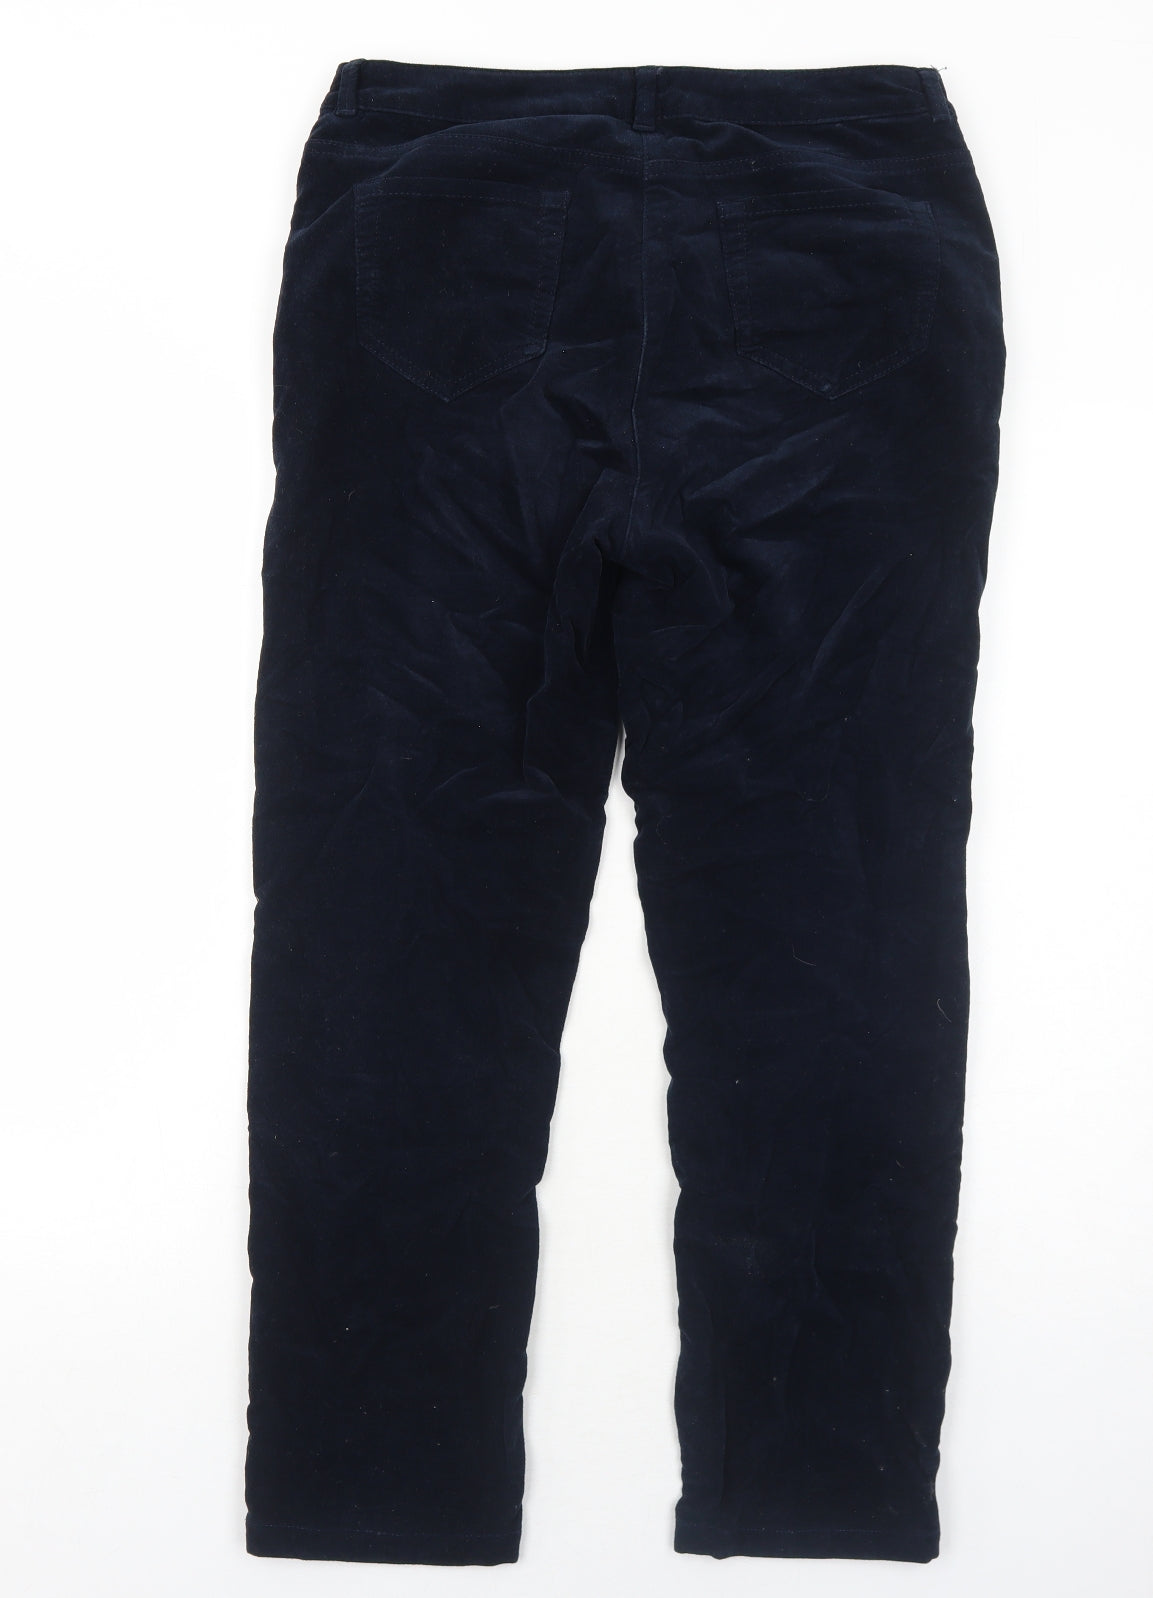 EAST Womens Blue Cotton Trousers Size 12 Regular Zip